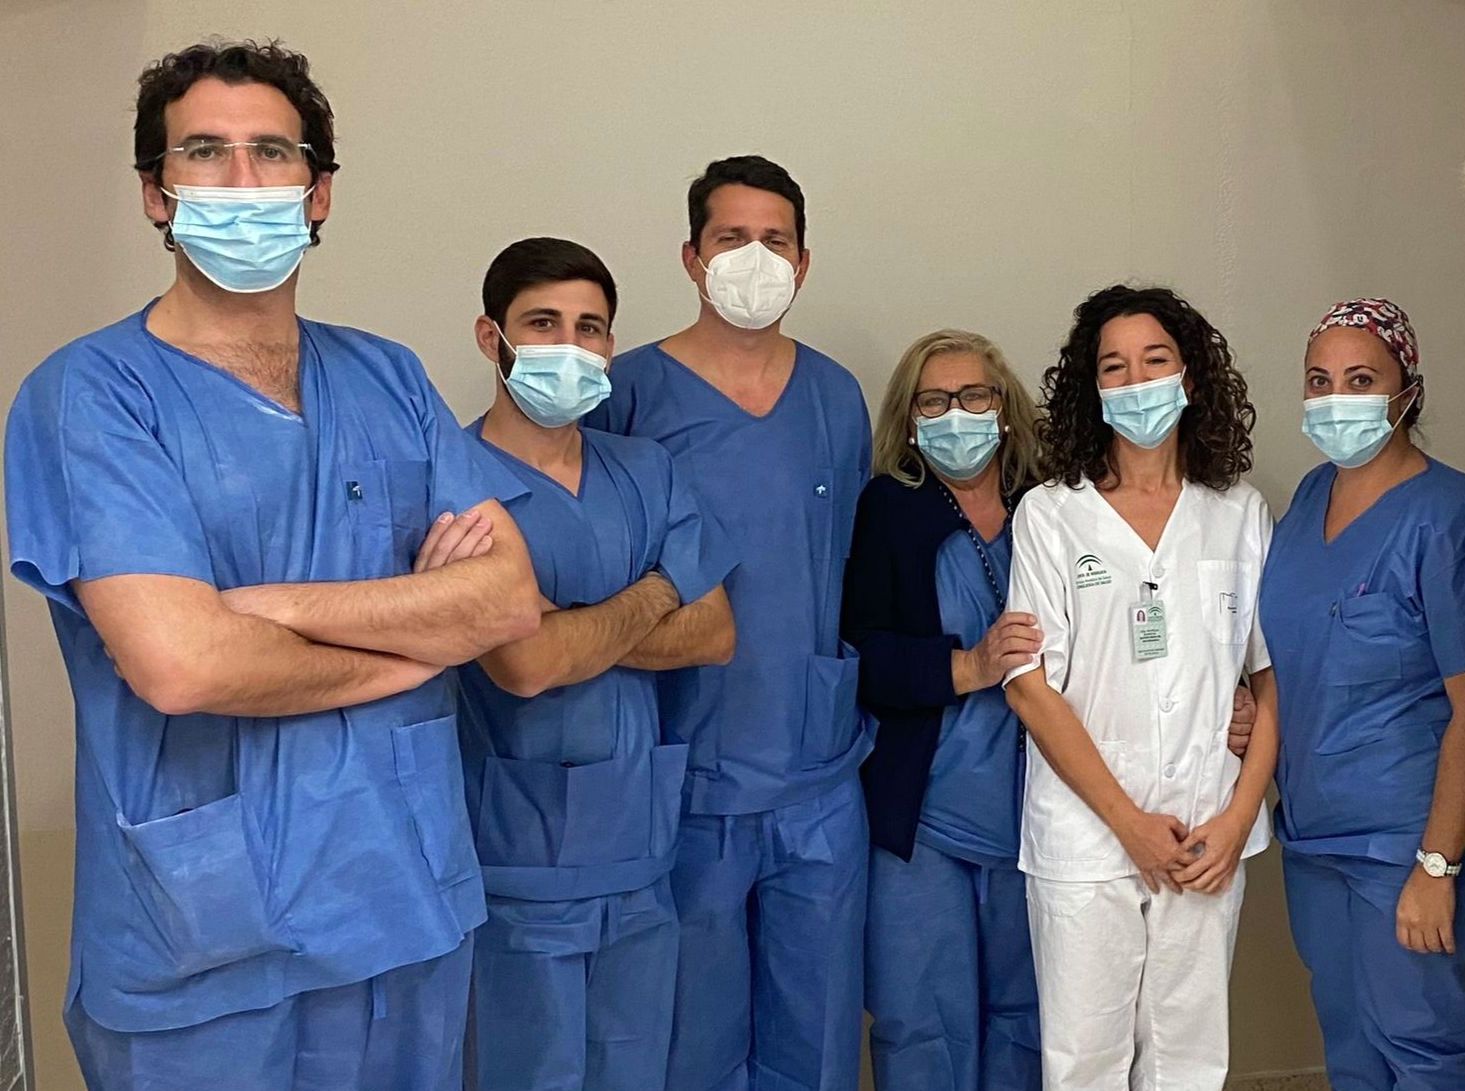 Urología del Hospital de Valme incorpora el último avance para la hiperplasia benigna de próstata: la terapia térmica de vapor de agua